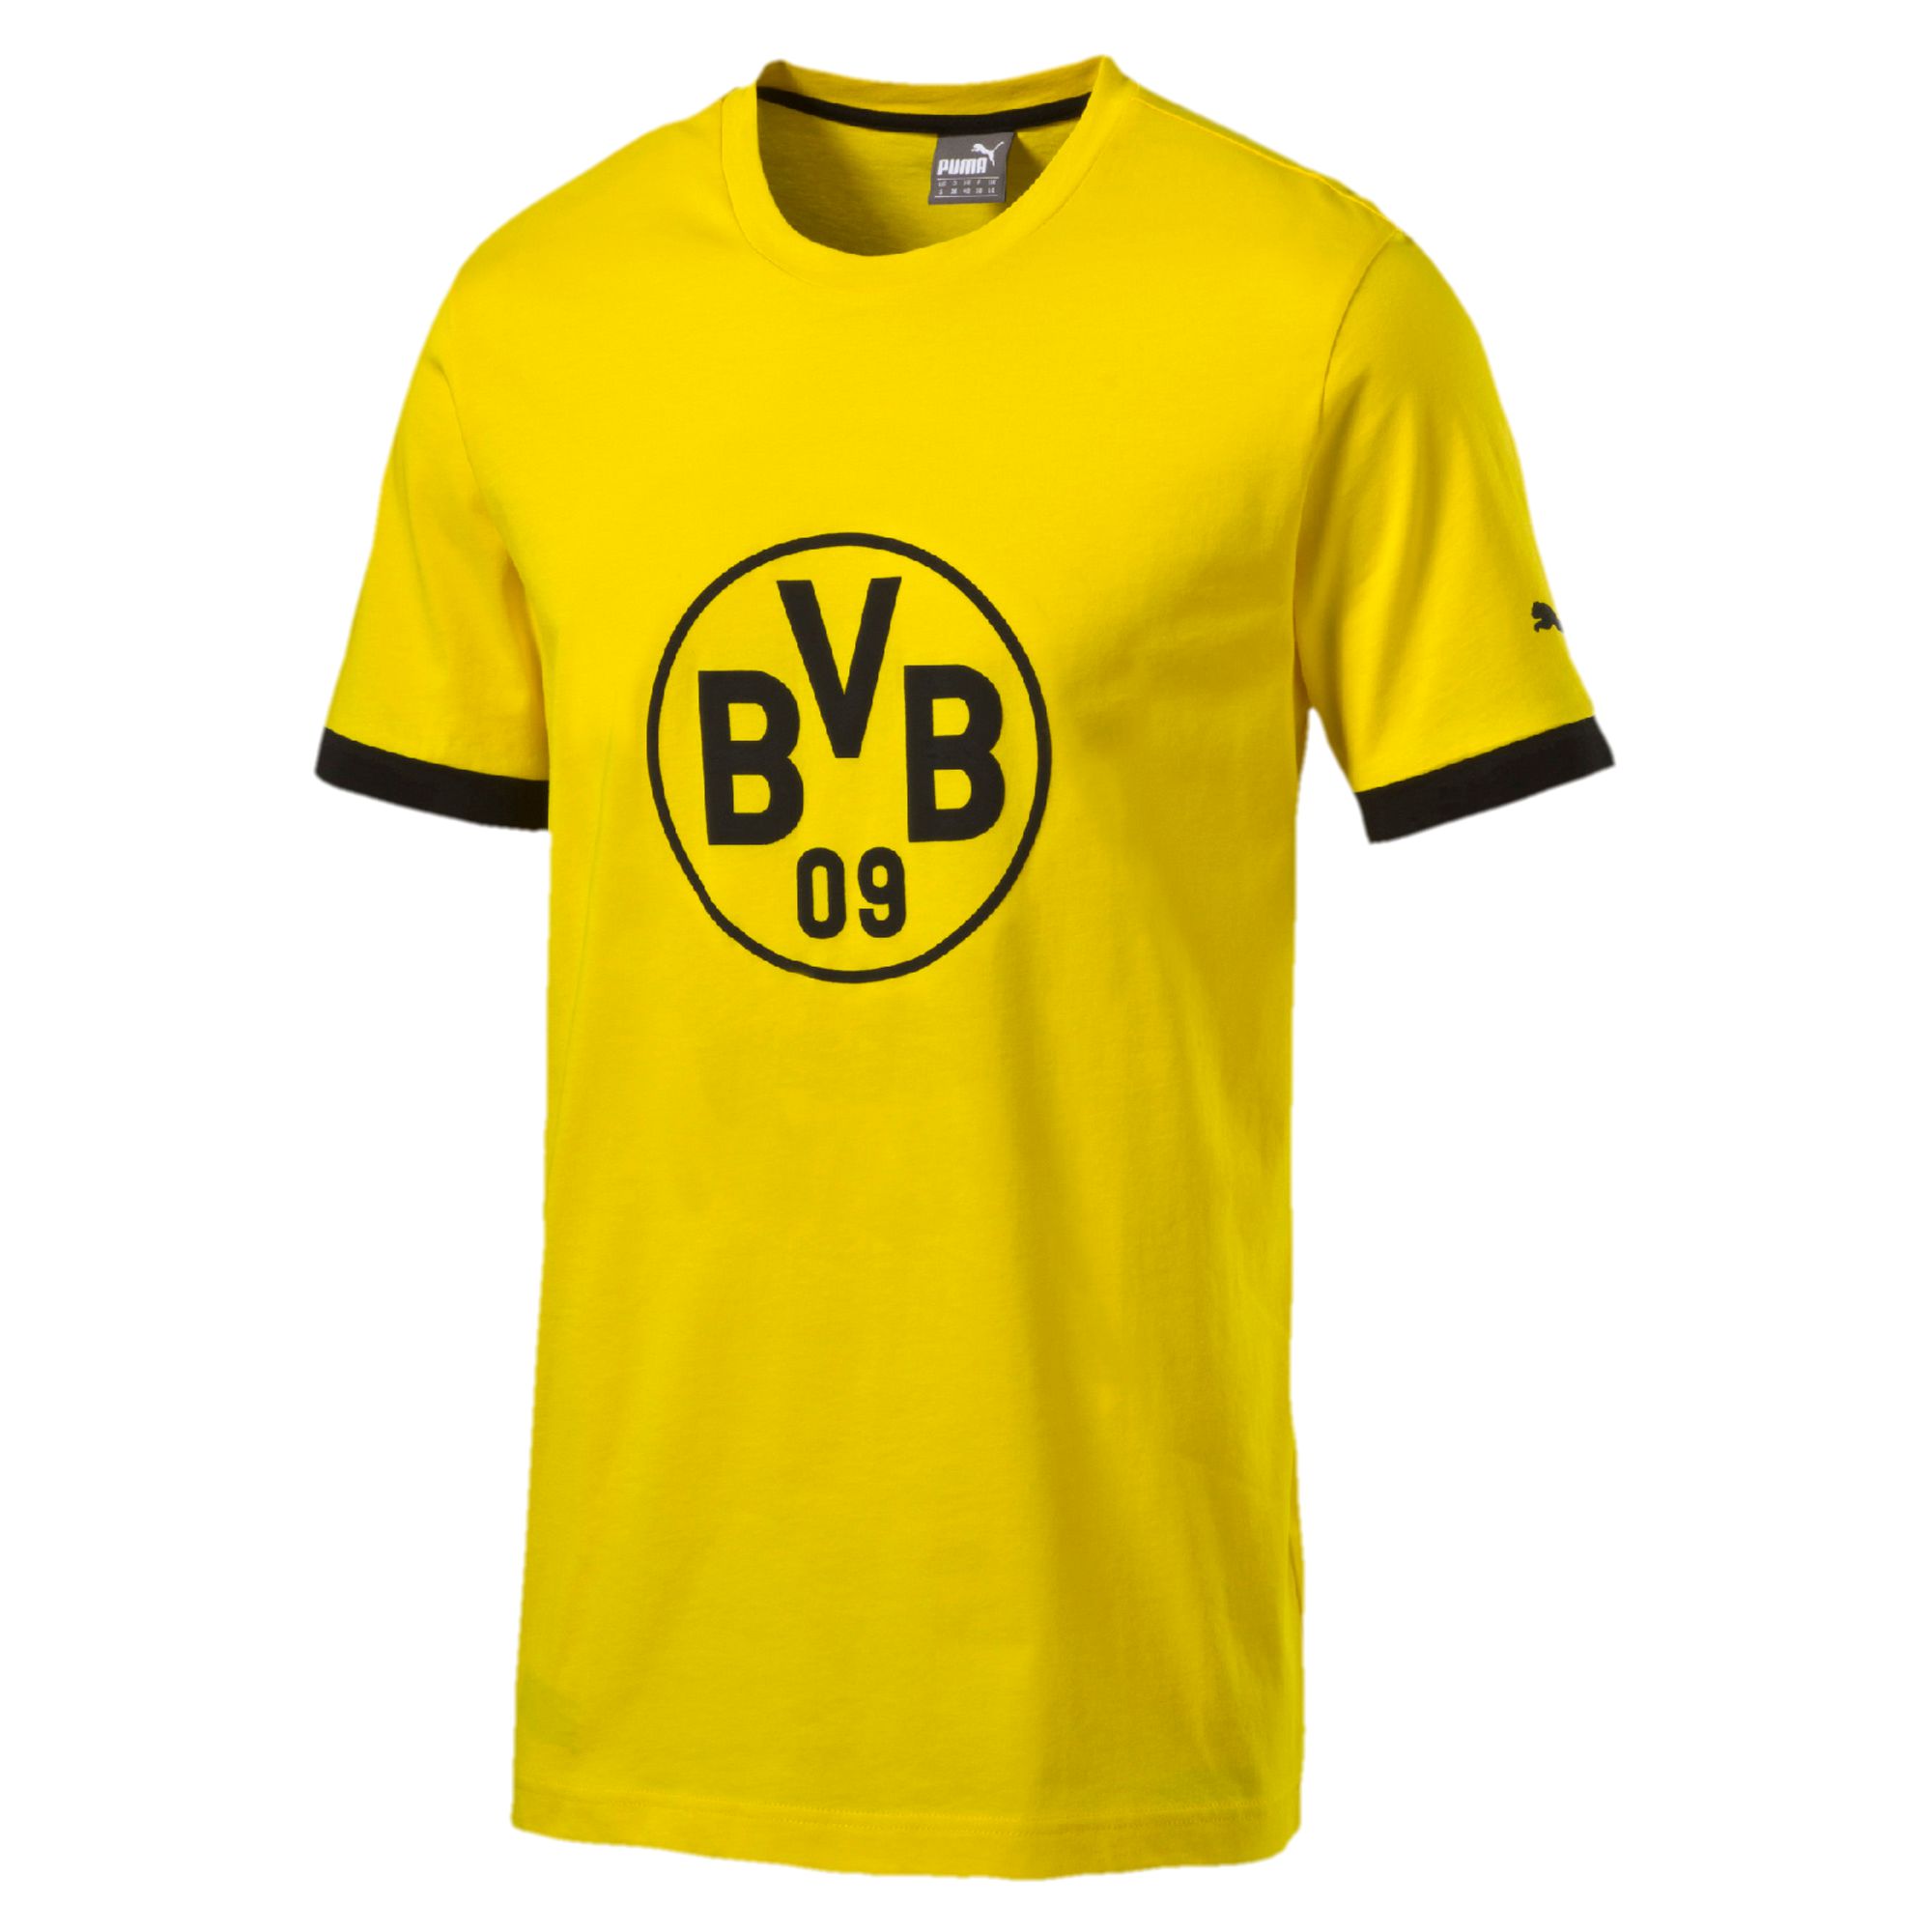 BVB герб мужская Футболка